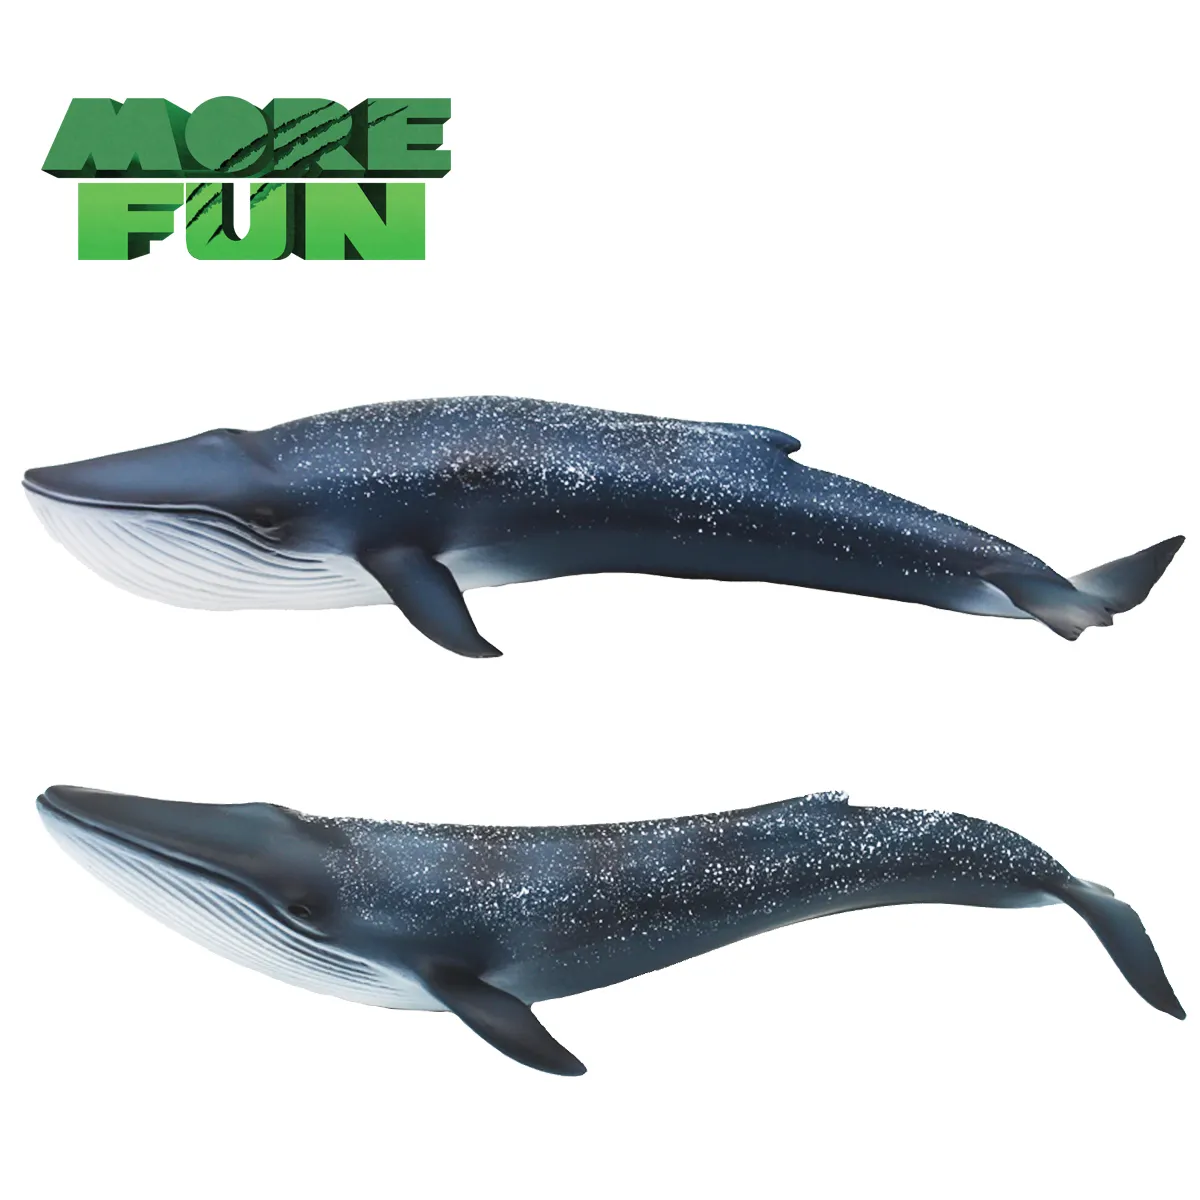 Morefun Solid PVC simulazione Sea Life Model Plastic Animal Toys figure Marine Ocean Animal figurine Blue Whale Toys